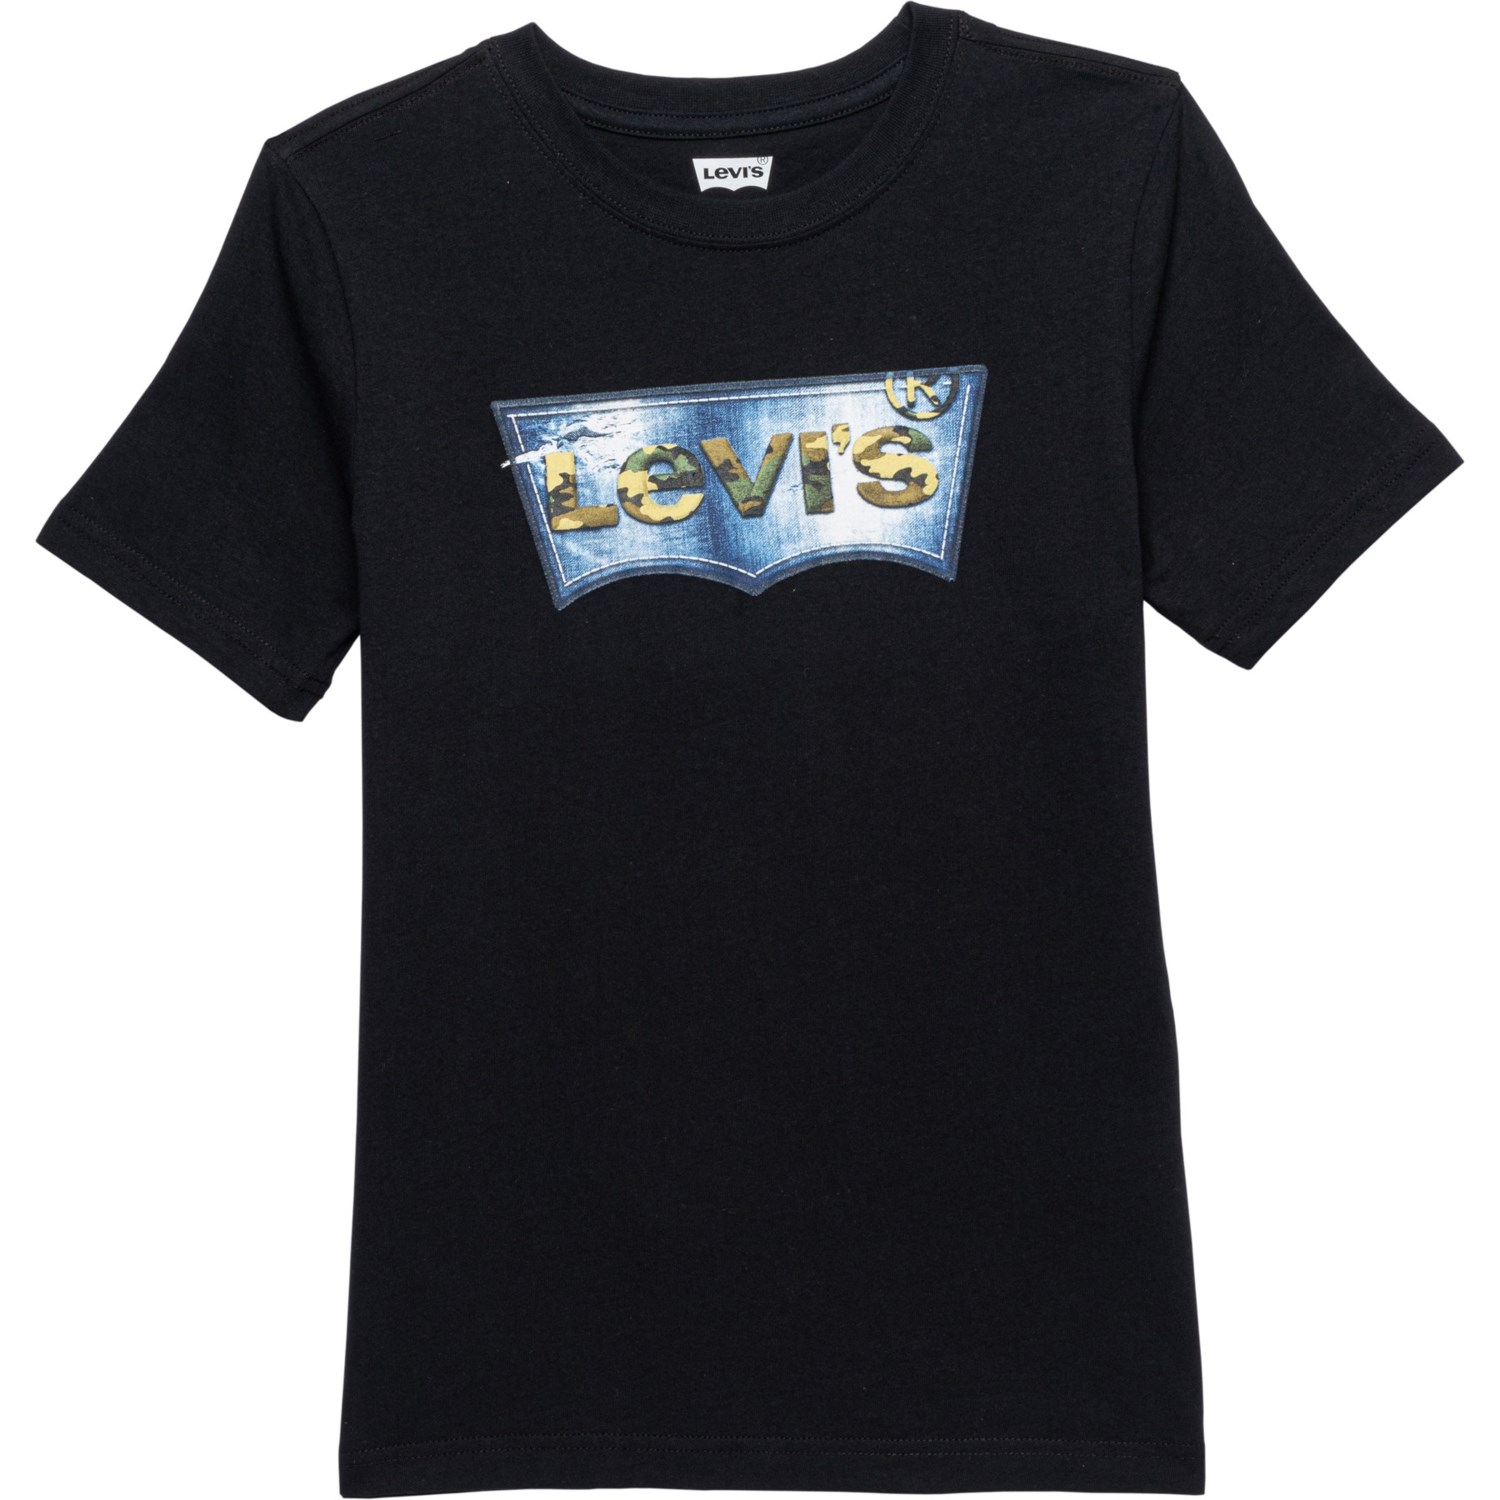 Levis Big Boys Core T-Shirt - Short Sleeve